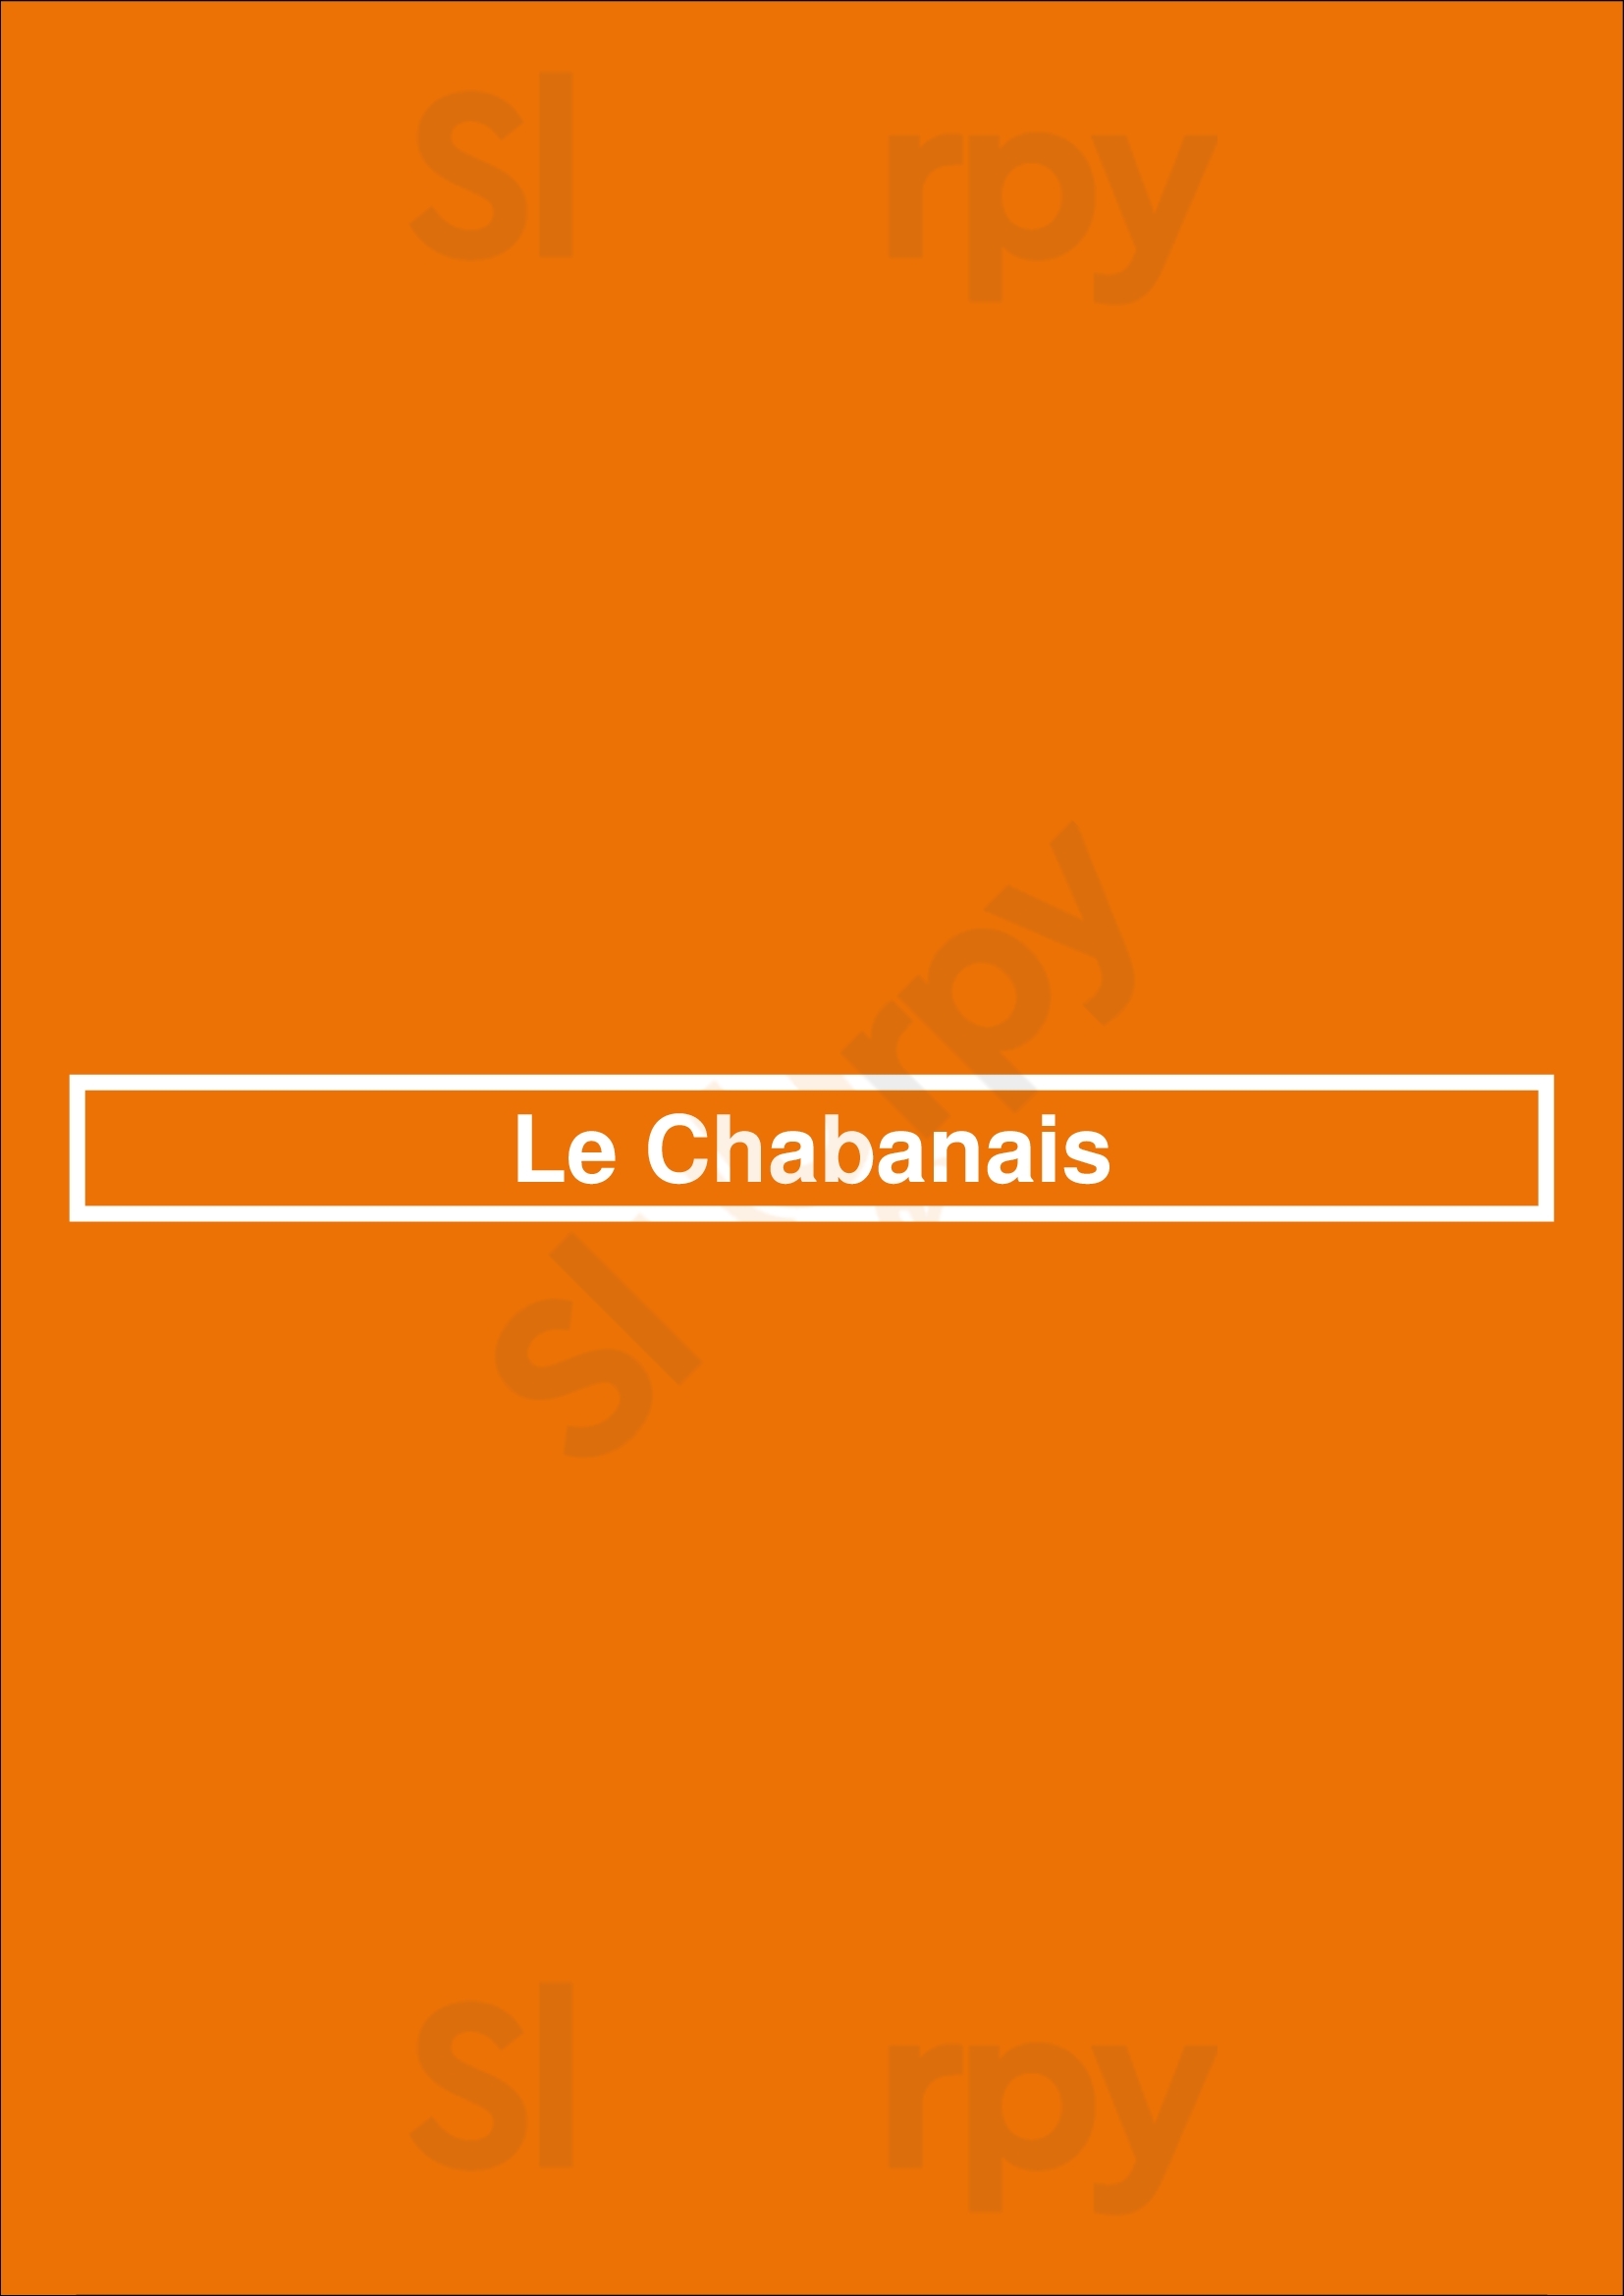 Le Chabanais Nîmes Menu - 1